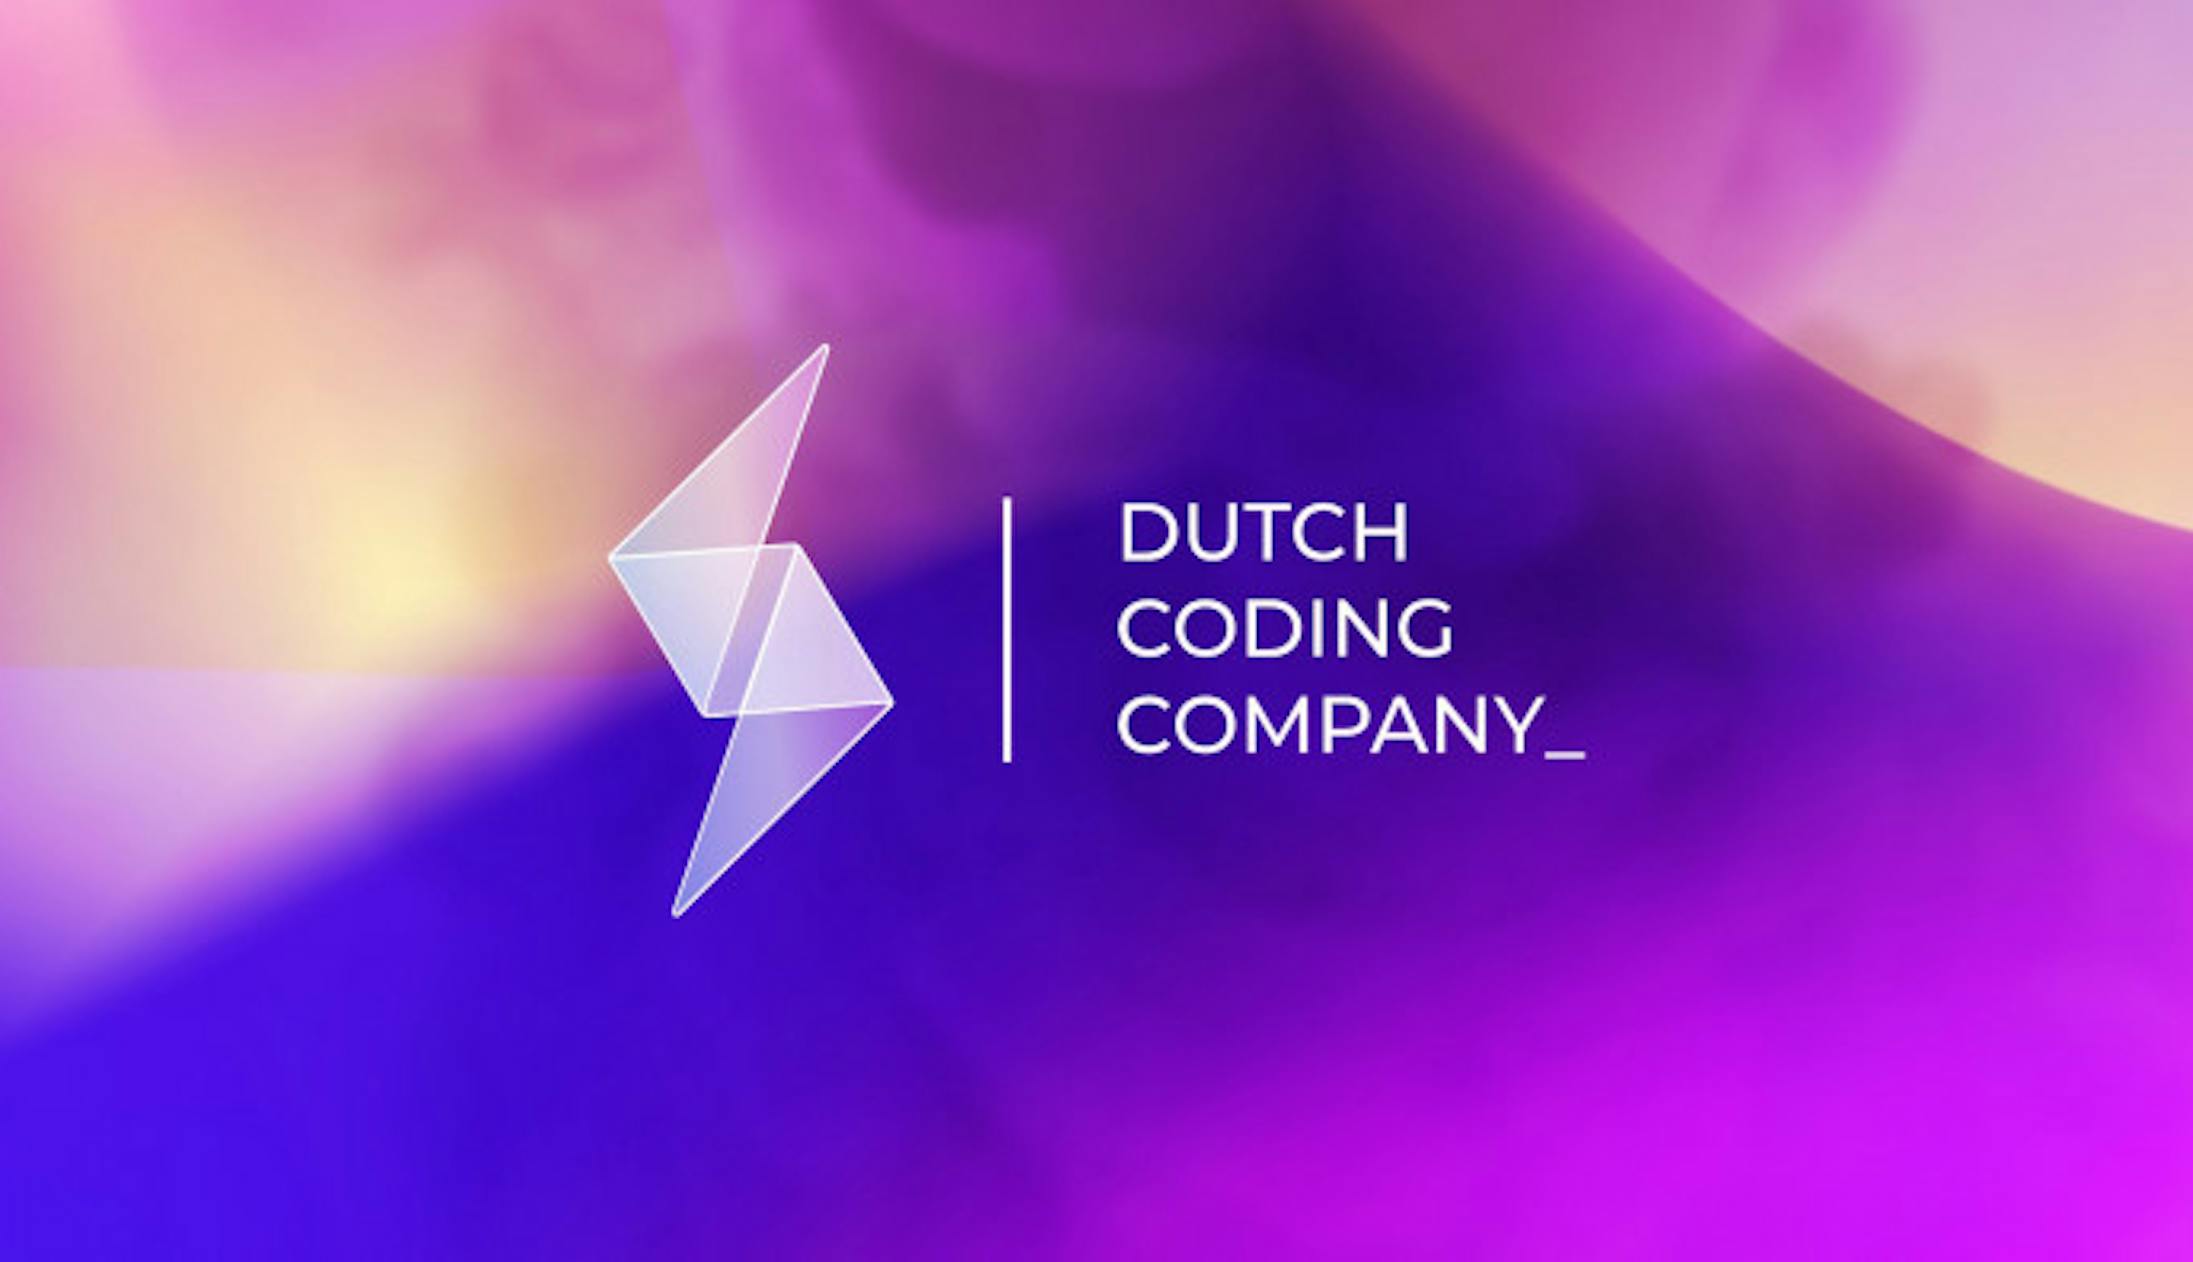 Dutch Coding Company 2018